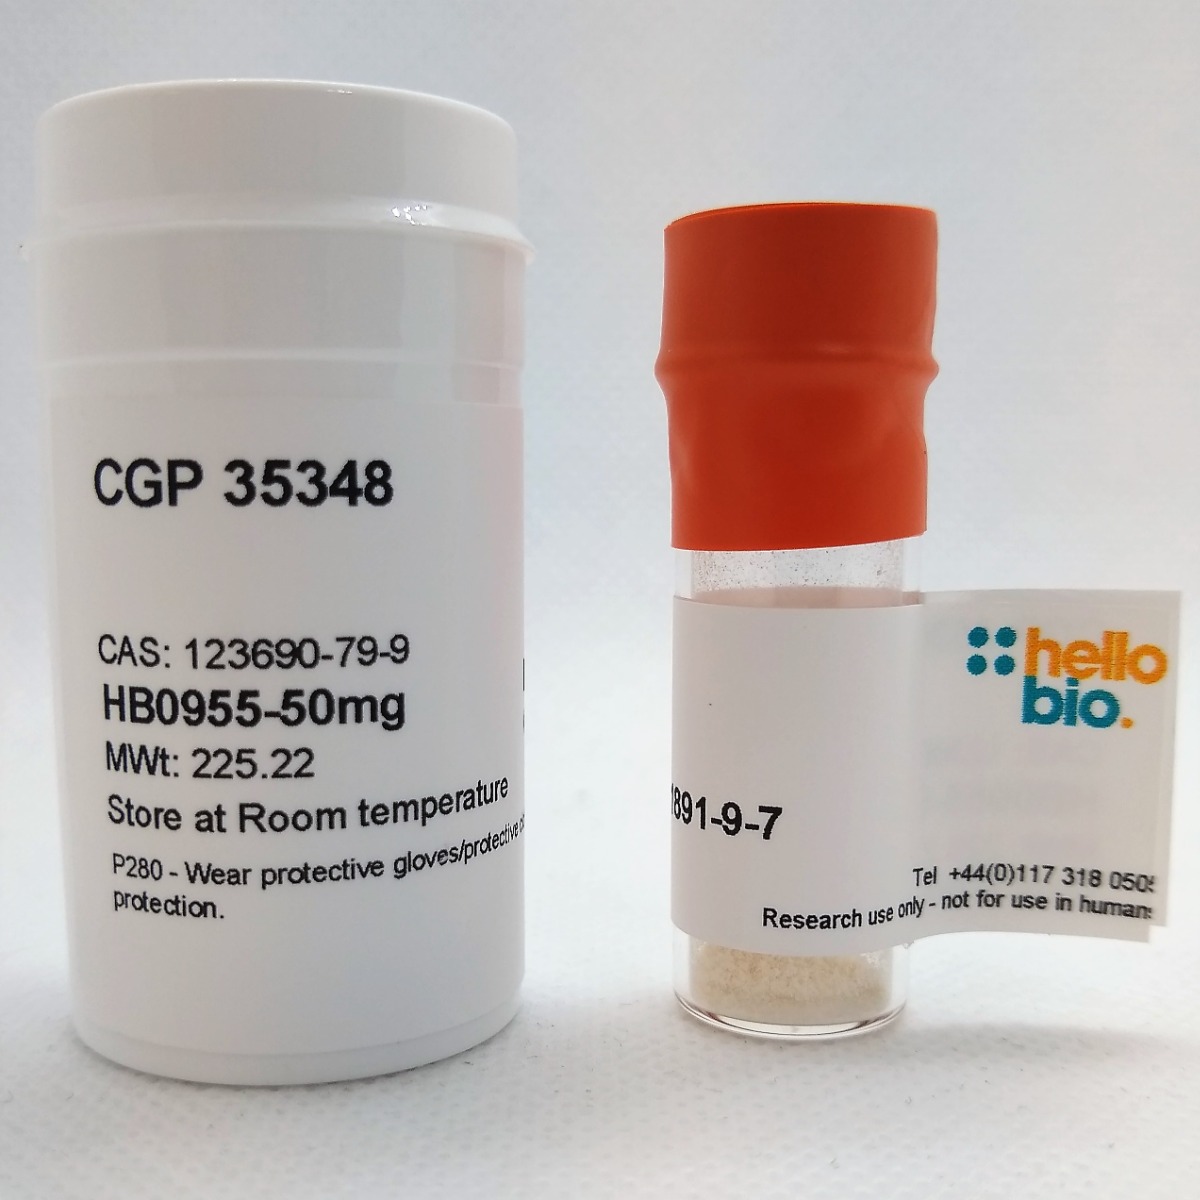 CGP 35348 product vial image | Hello Bio